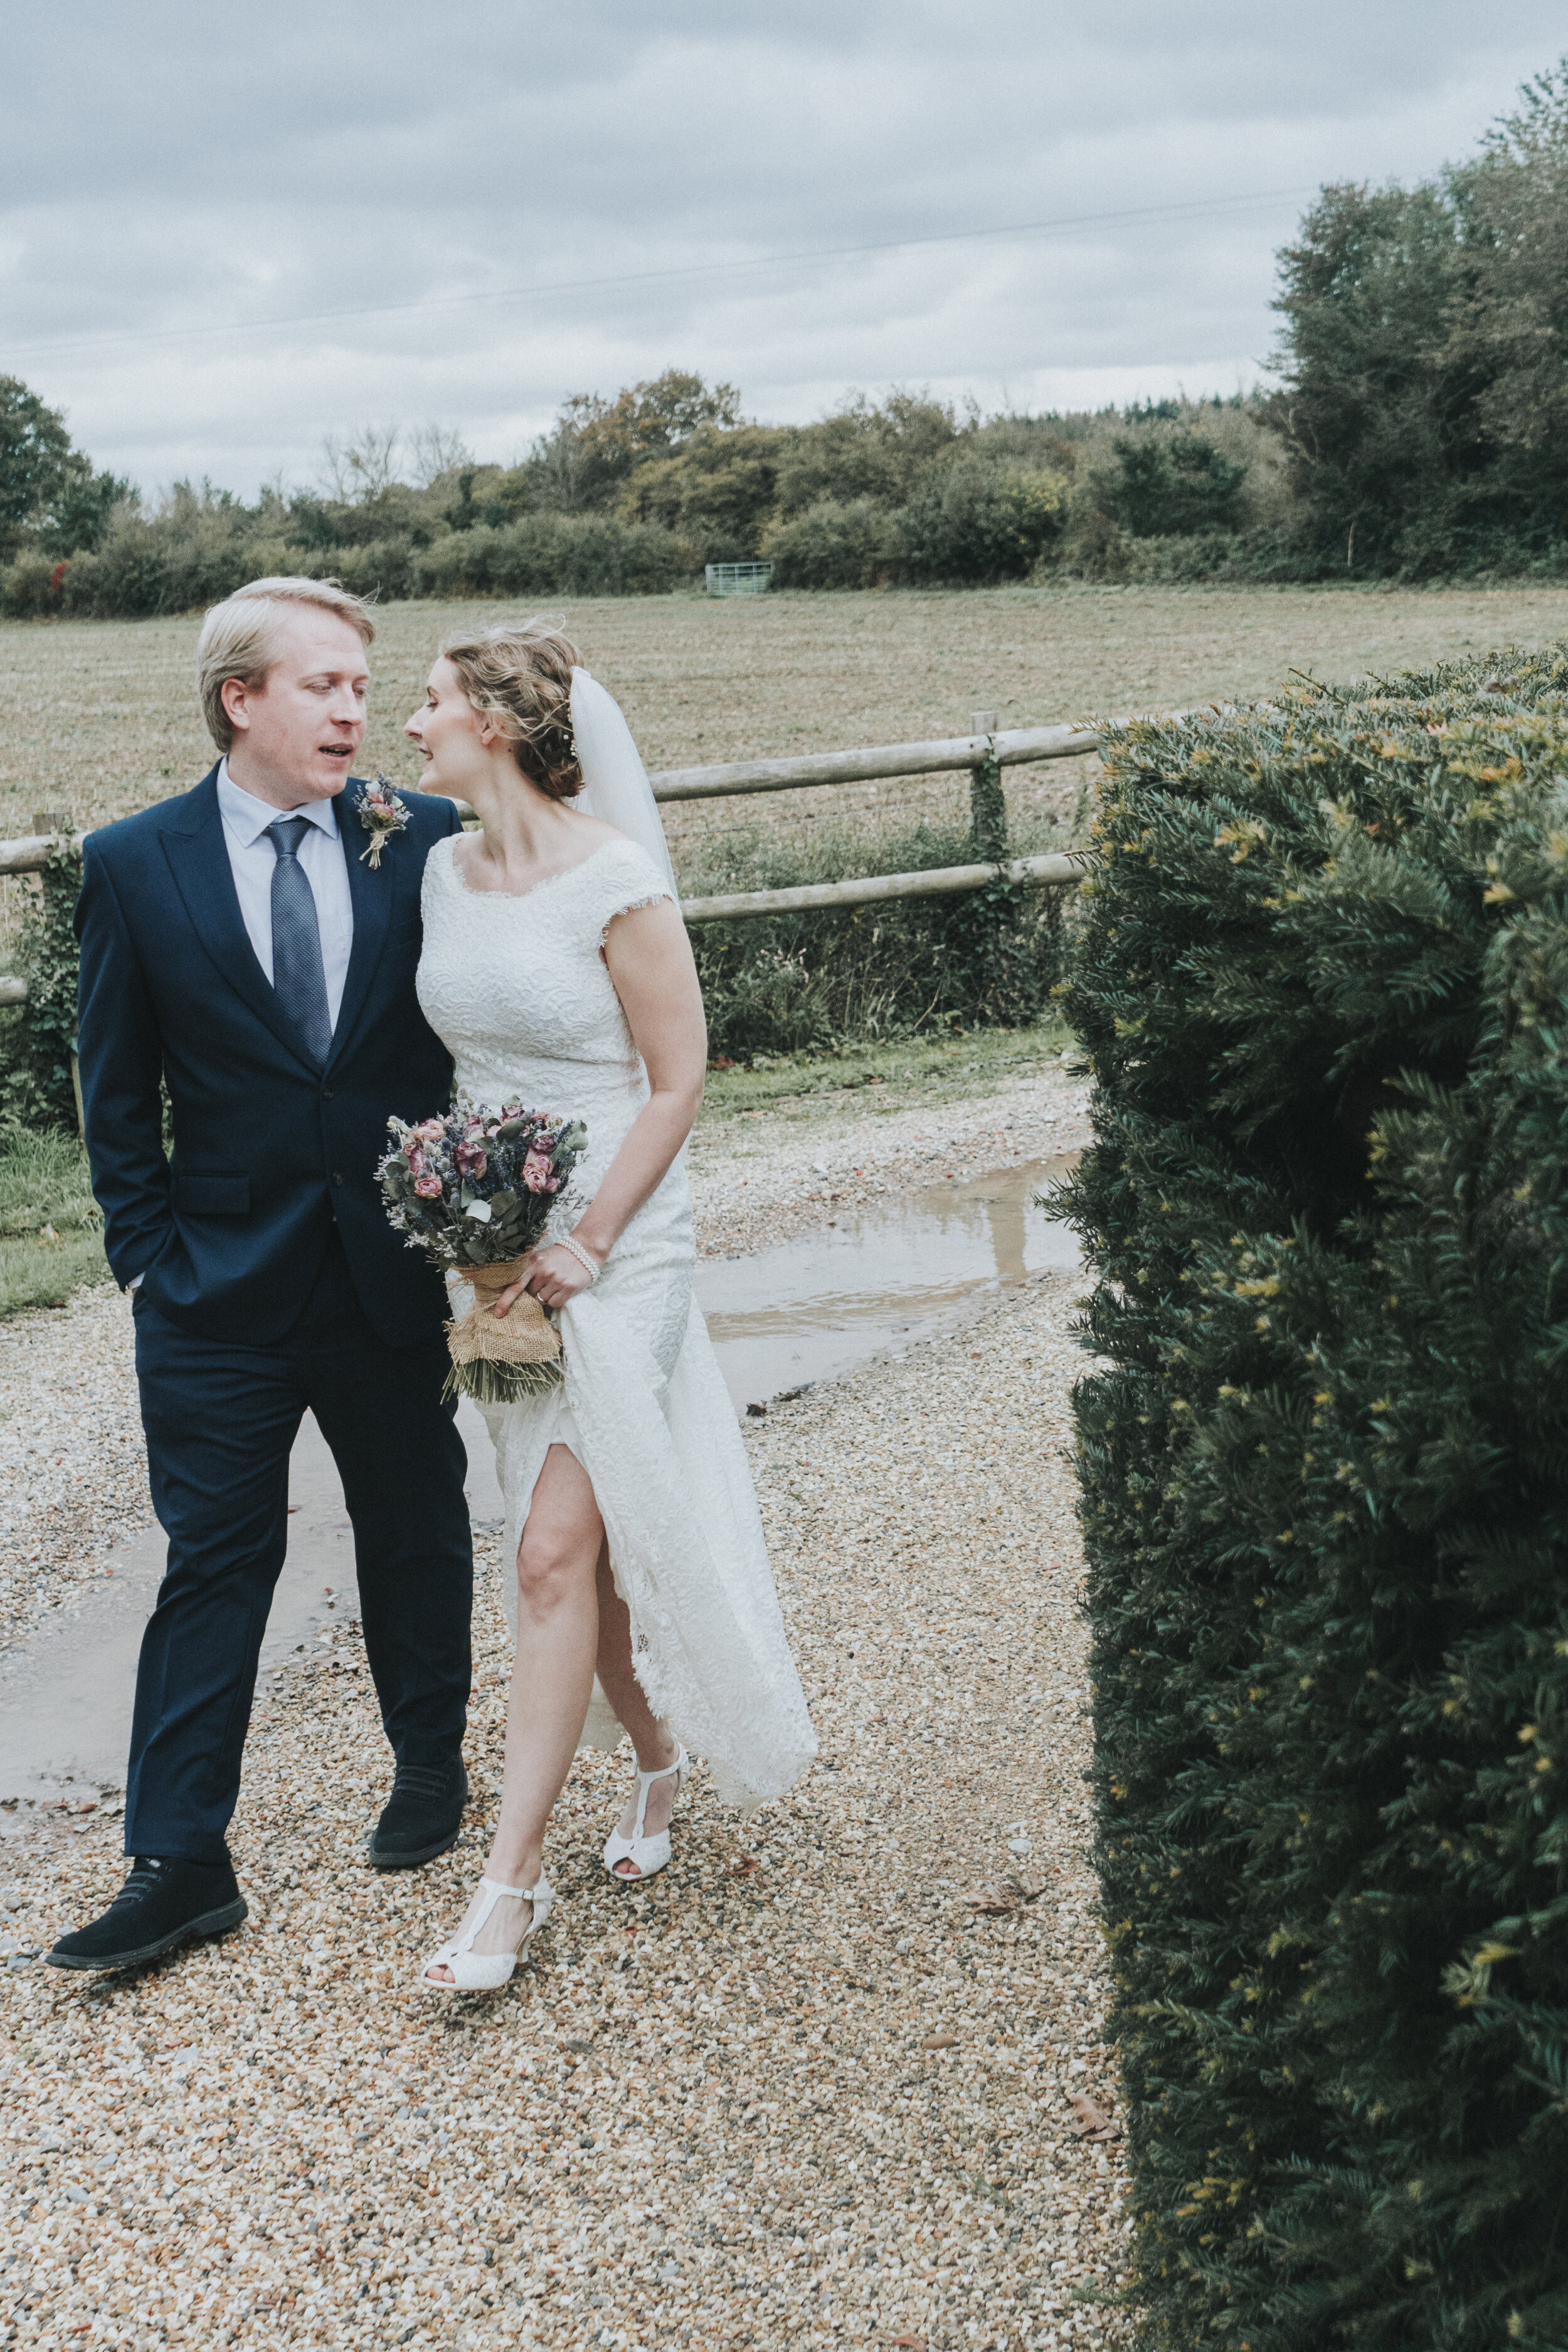 Kelsie & Aron Bix Manor Wedding Henley - Jay Anderson Photography Wedding Oxfordshire 174.jpg